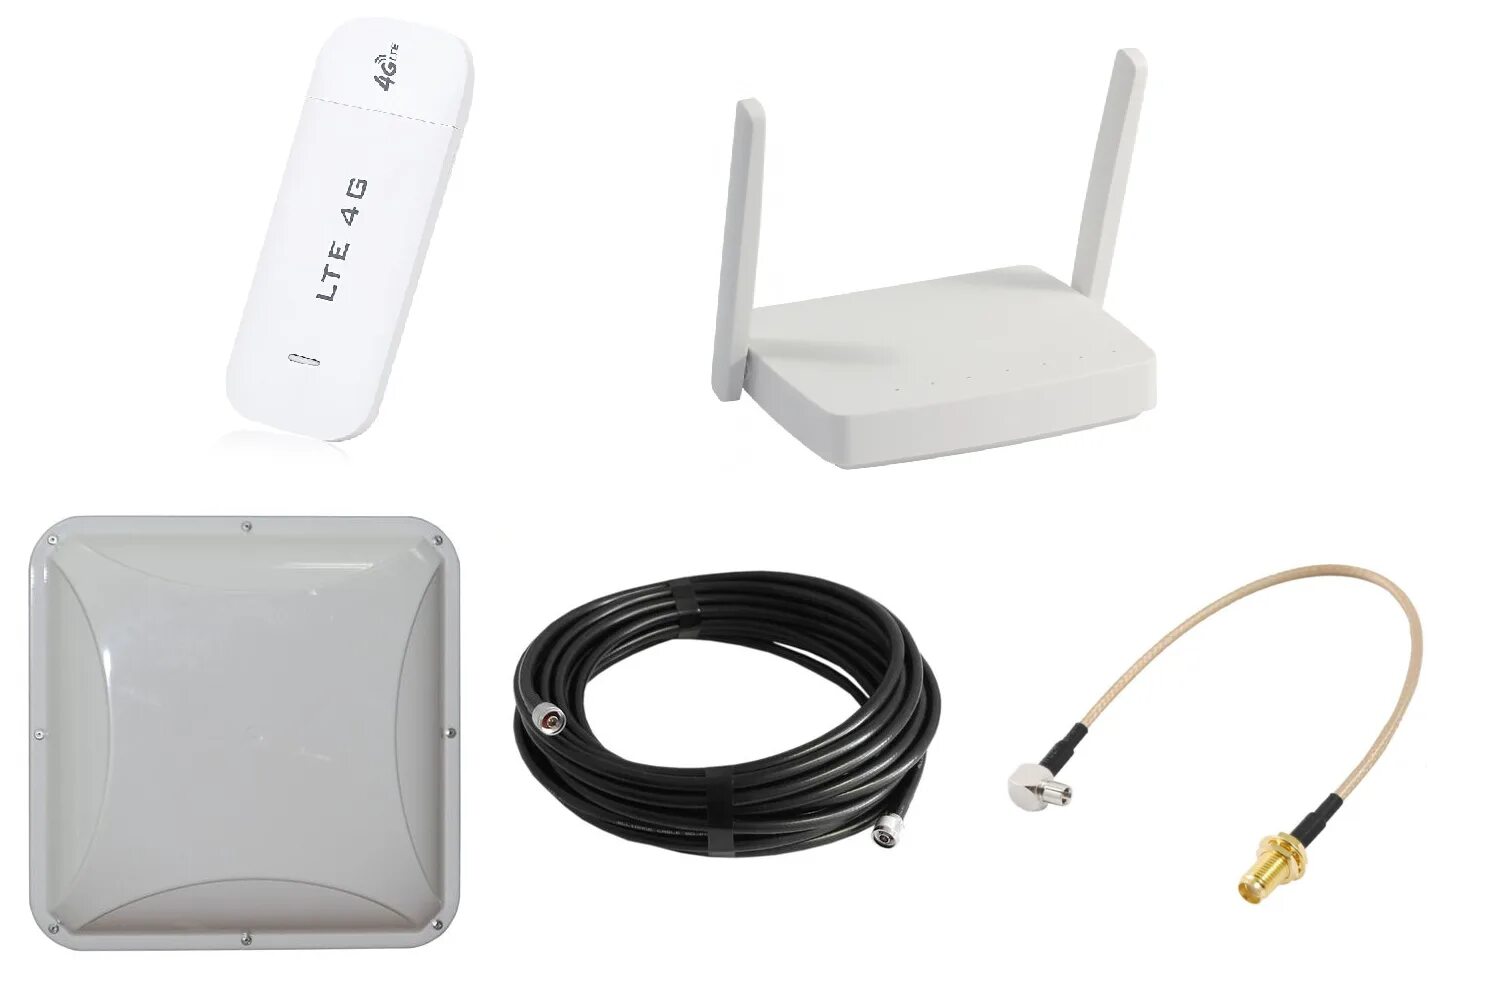 Keenetic 4g антенна. Антенна комнатная VEGATEL Ant-700/2700-Pi (Тип а). GSM модем 3g/4g/LTE. 4g USB-модем, Wi-Fi-роутер. USB 4g модем с внешней антенной.